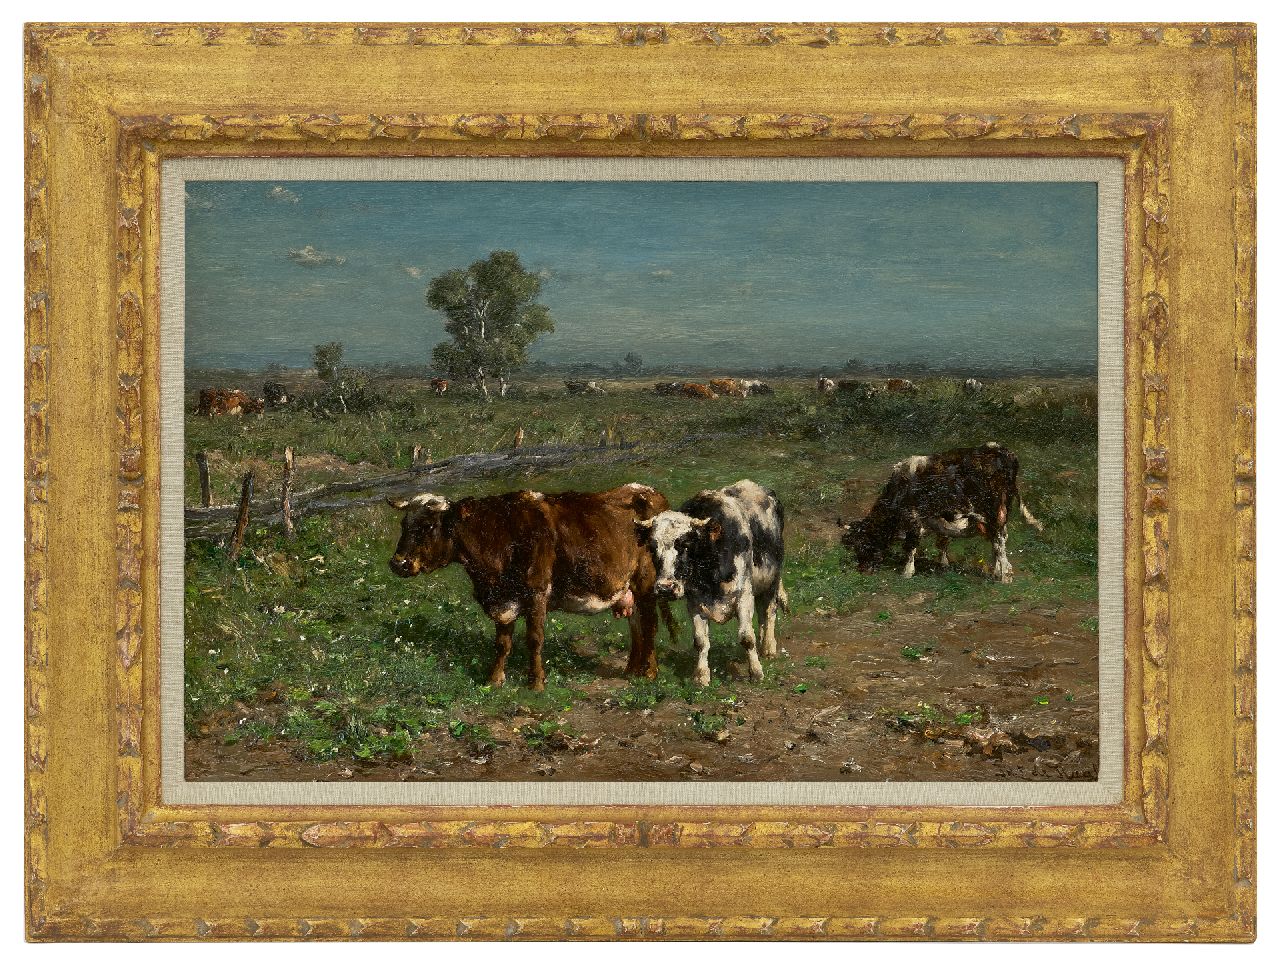 Haas J.H.L. de | Johannes Hubertus Leonardus de Haas | Paintings offered for sale | Cattle in a meadow, oil on panel 31.3 x 47.2 cm, signed l.r.